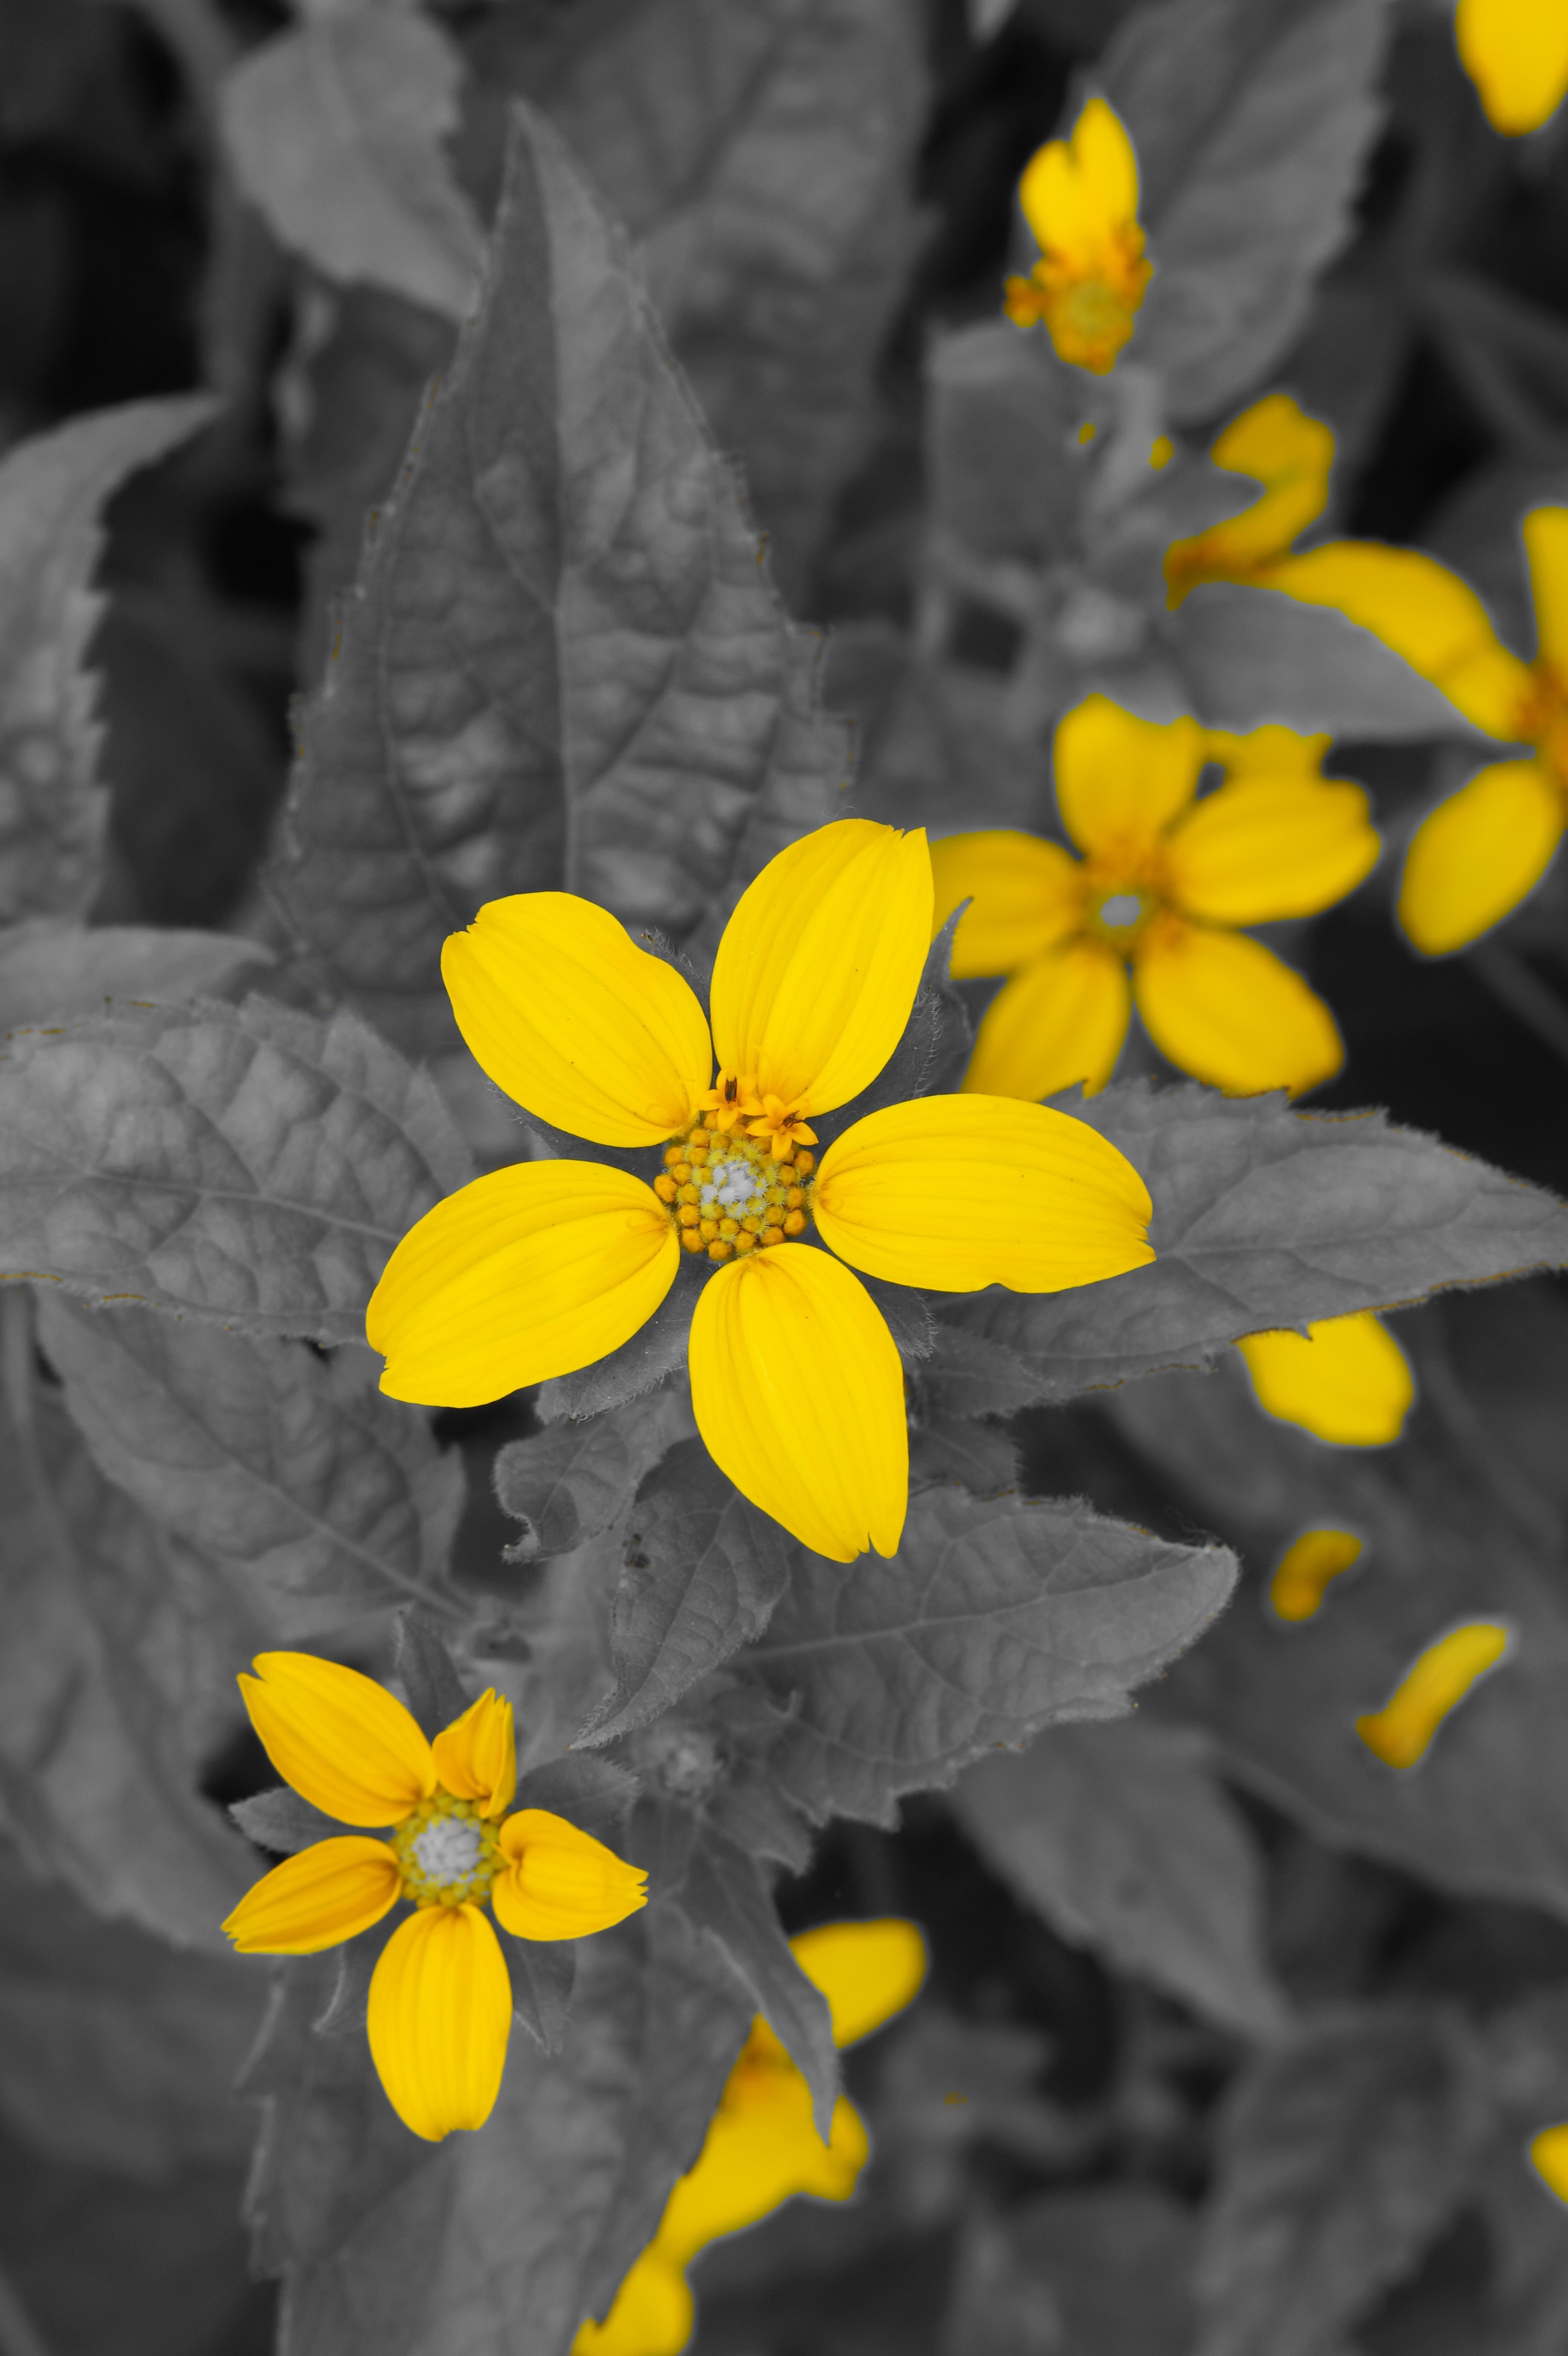 yellow 5 petaled flowers